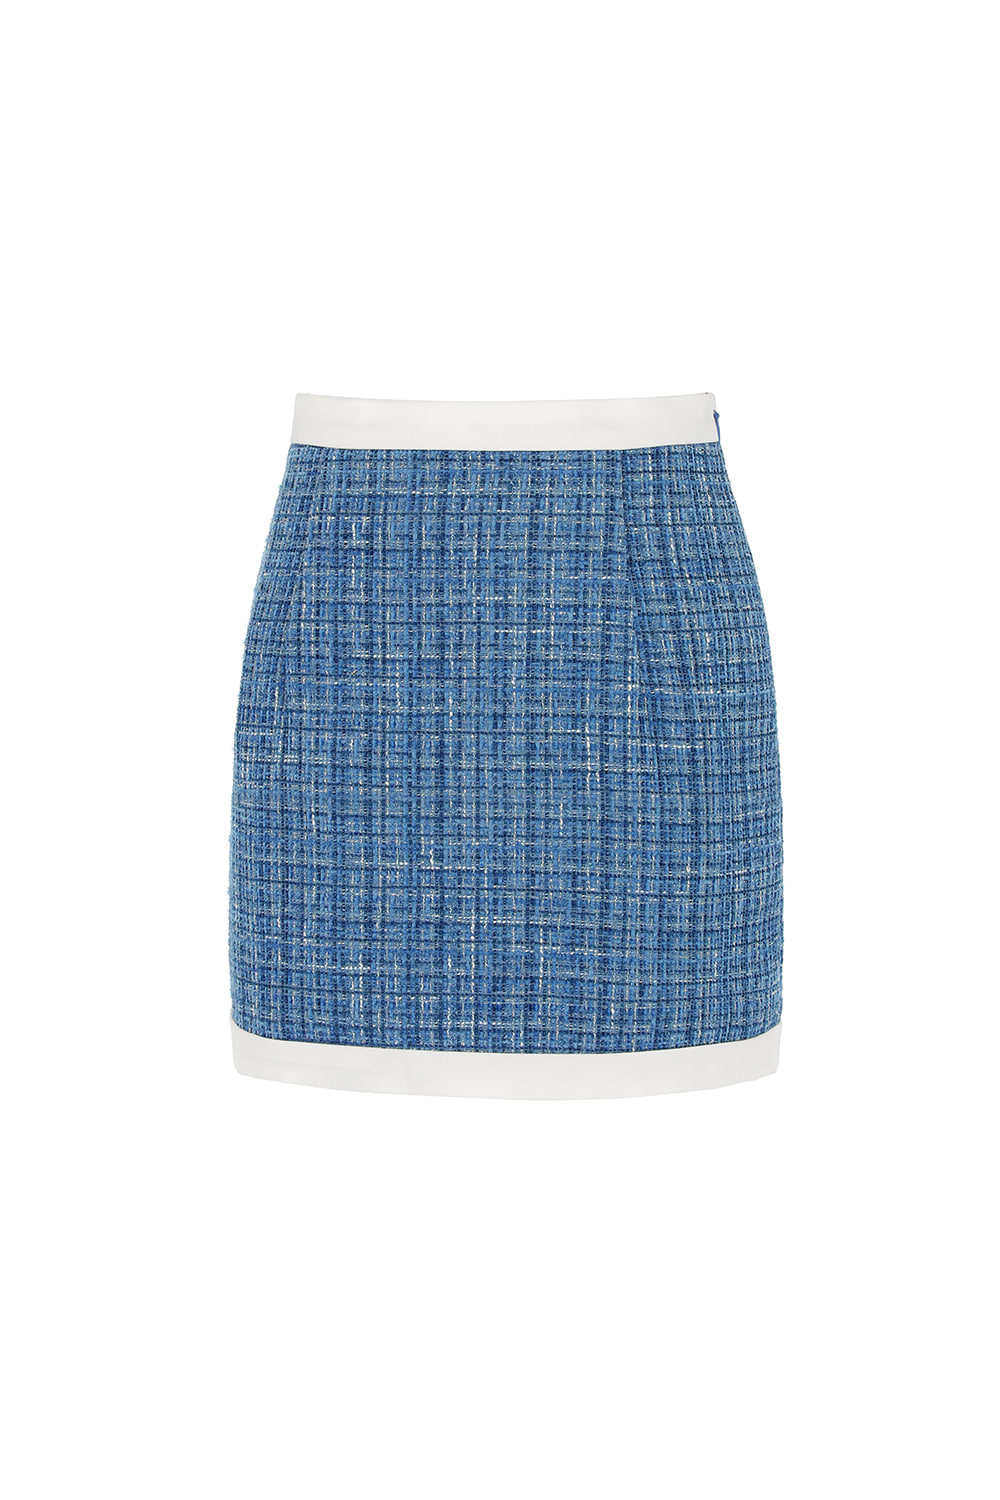 Bling Tweed Skirt - BLUE